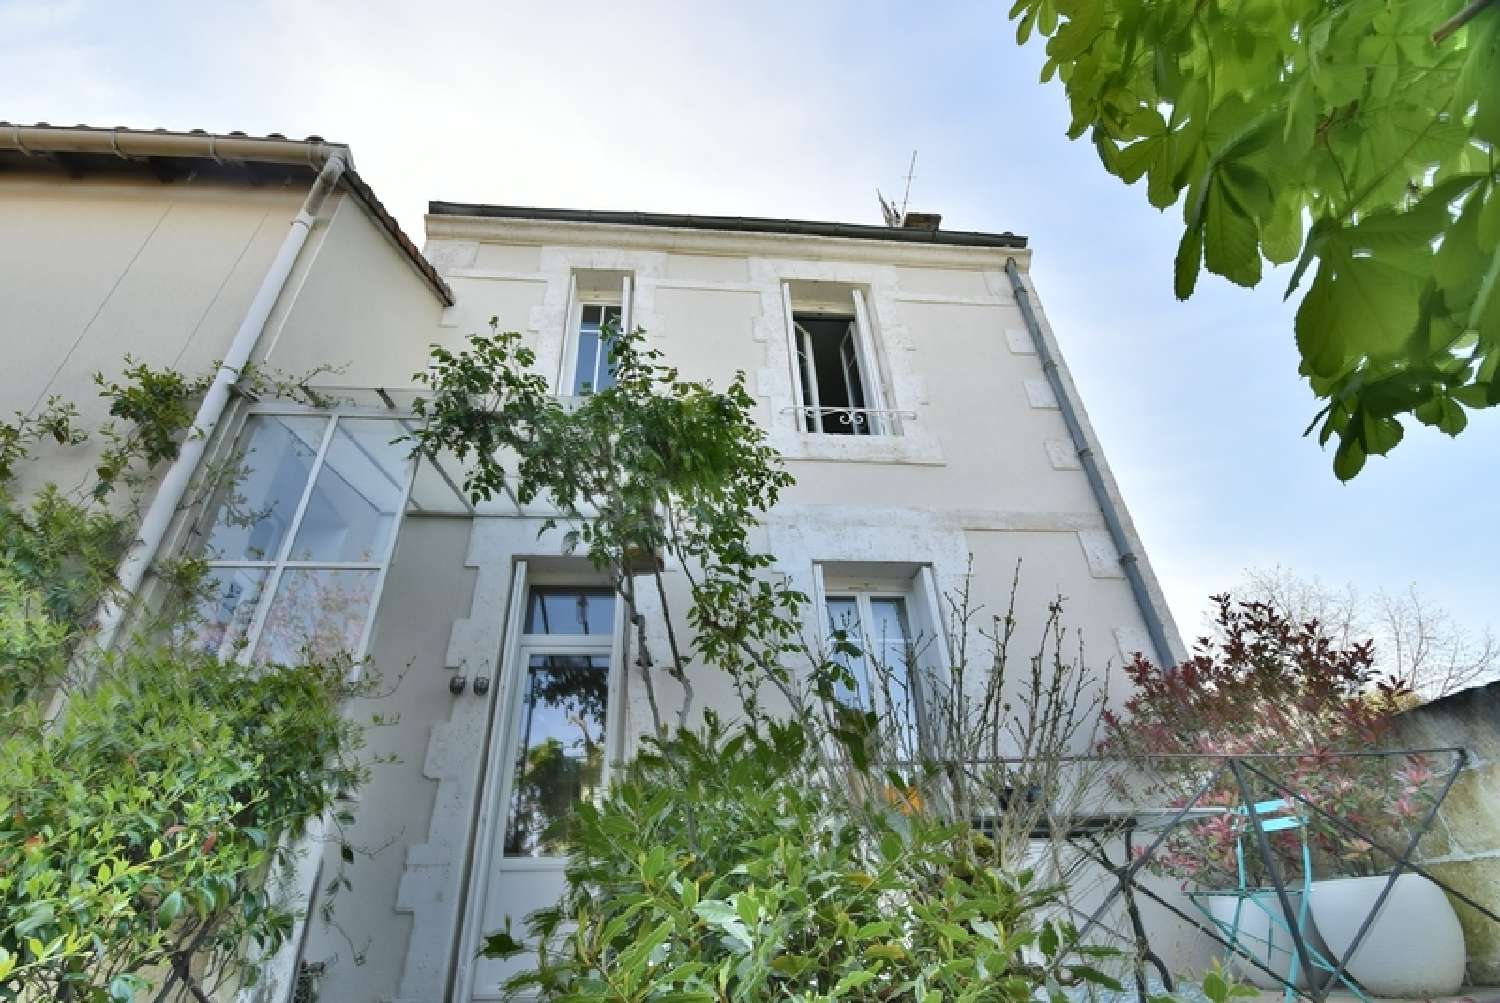  à vendre maison Angoulême Charente 3